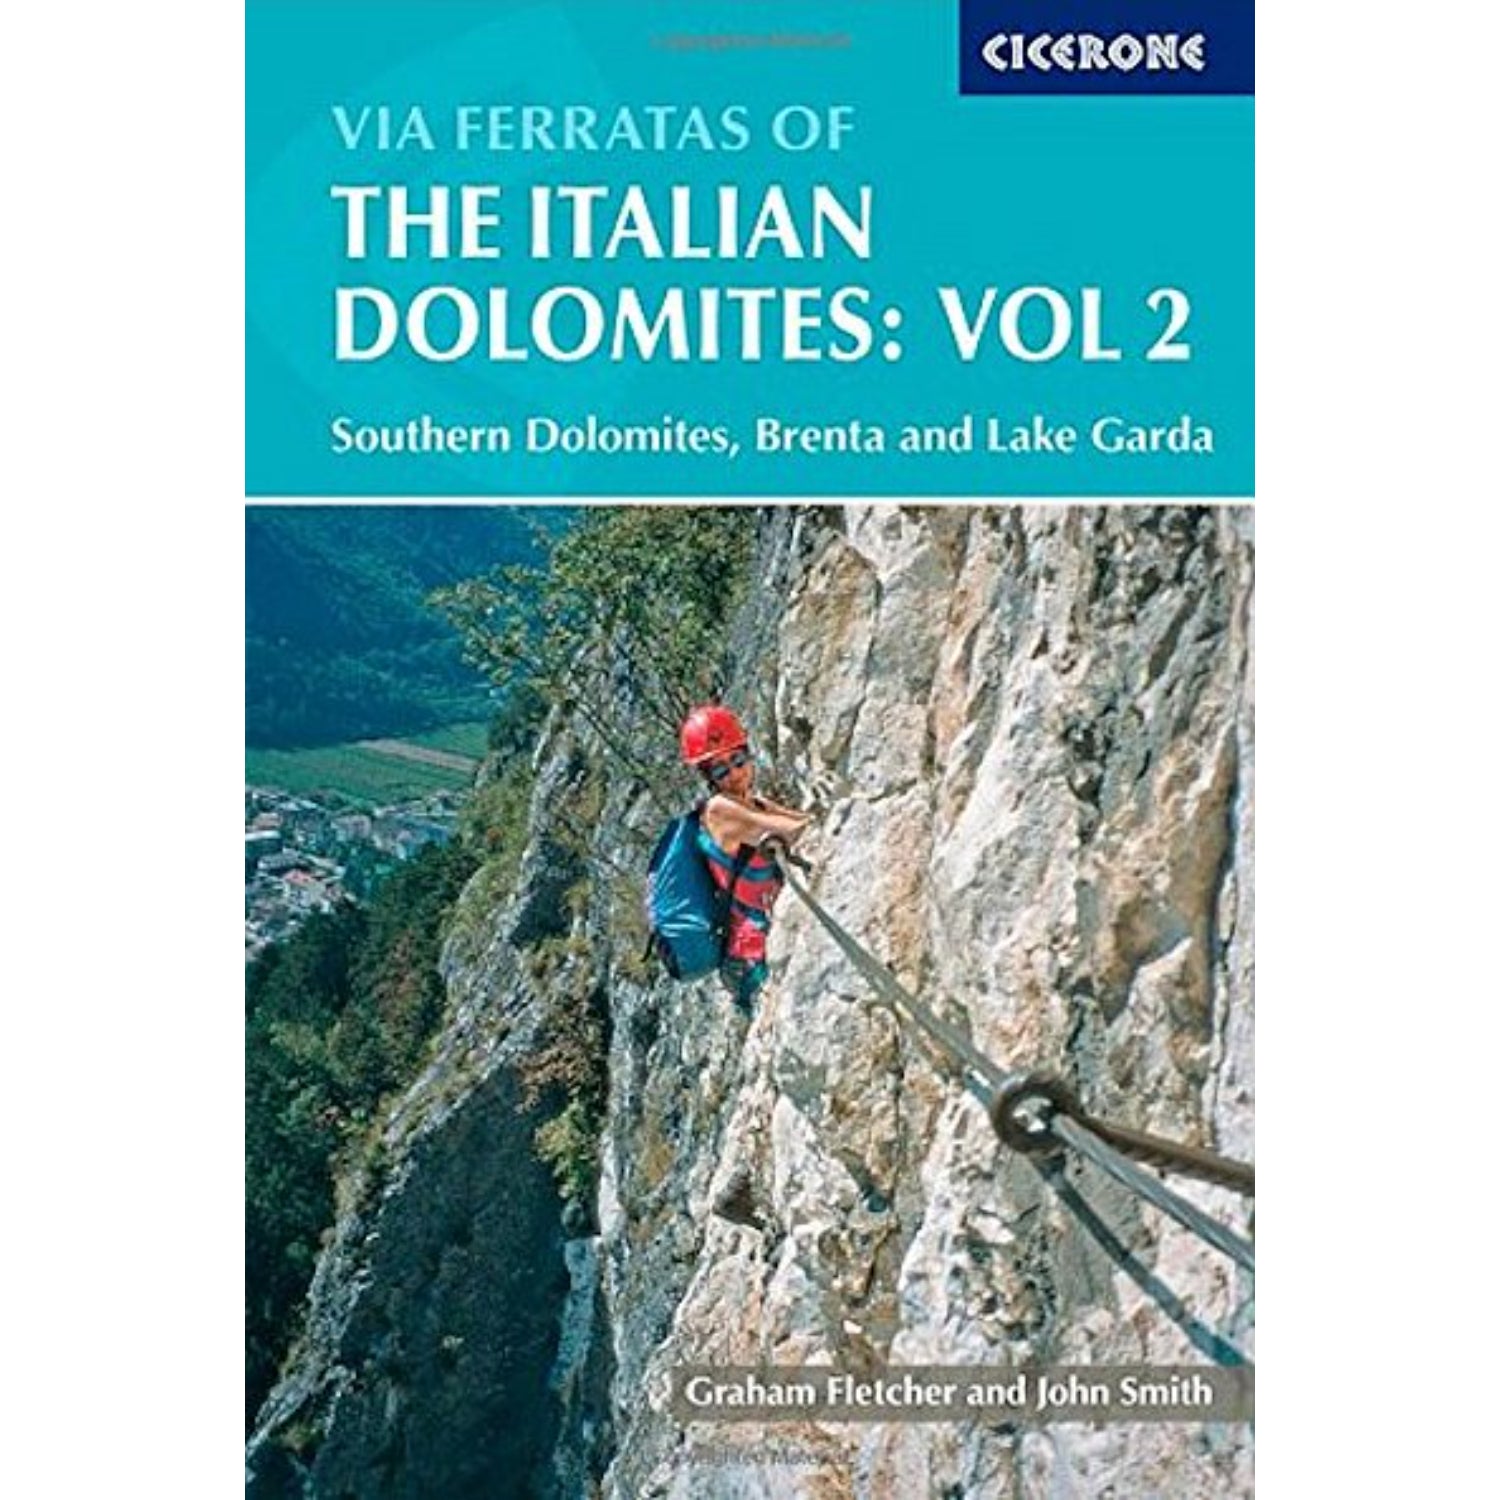 Via Ferratas Of The Italian Dolomites: Vol 2 - Southern Dolomites, Brenta and Lake Garda